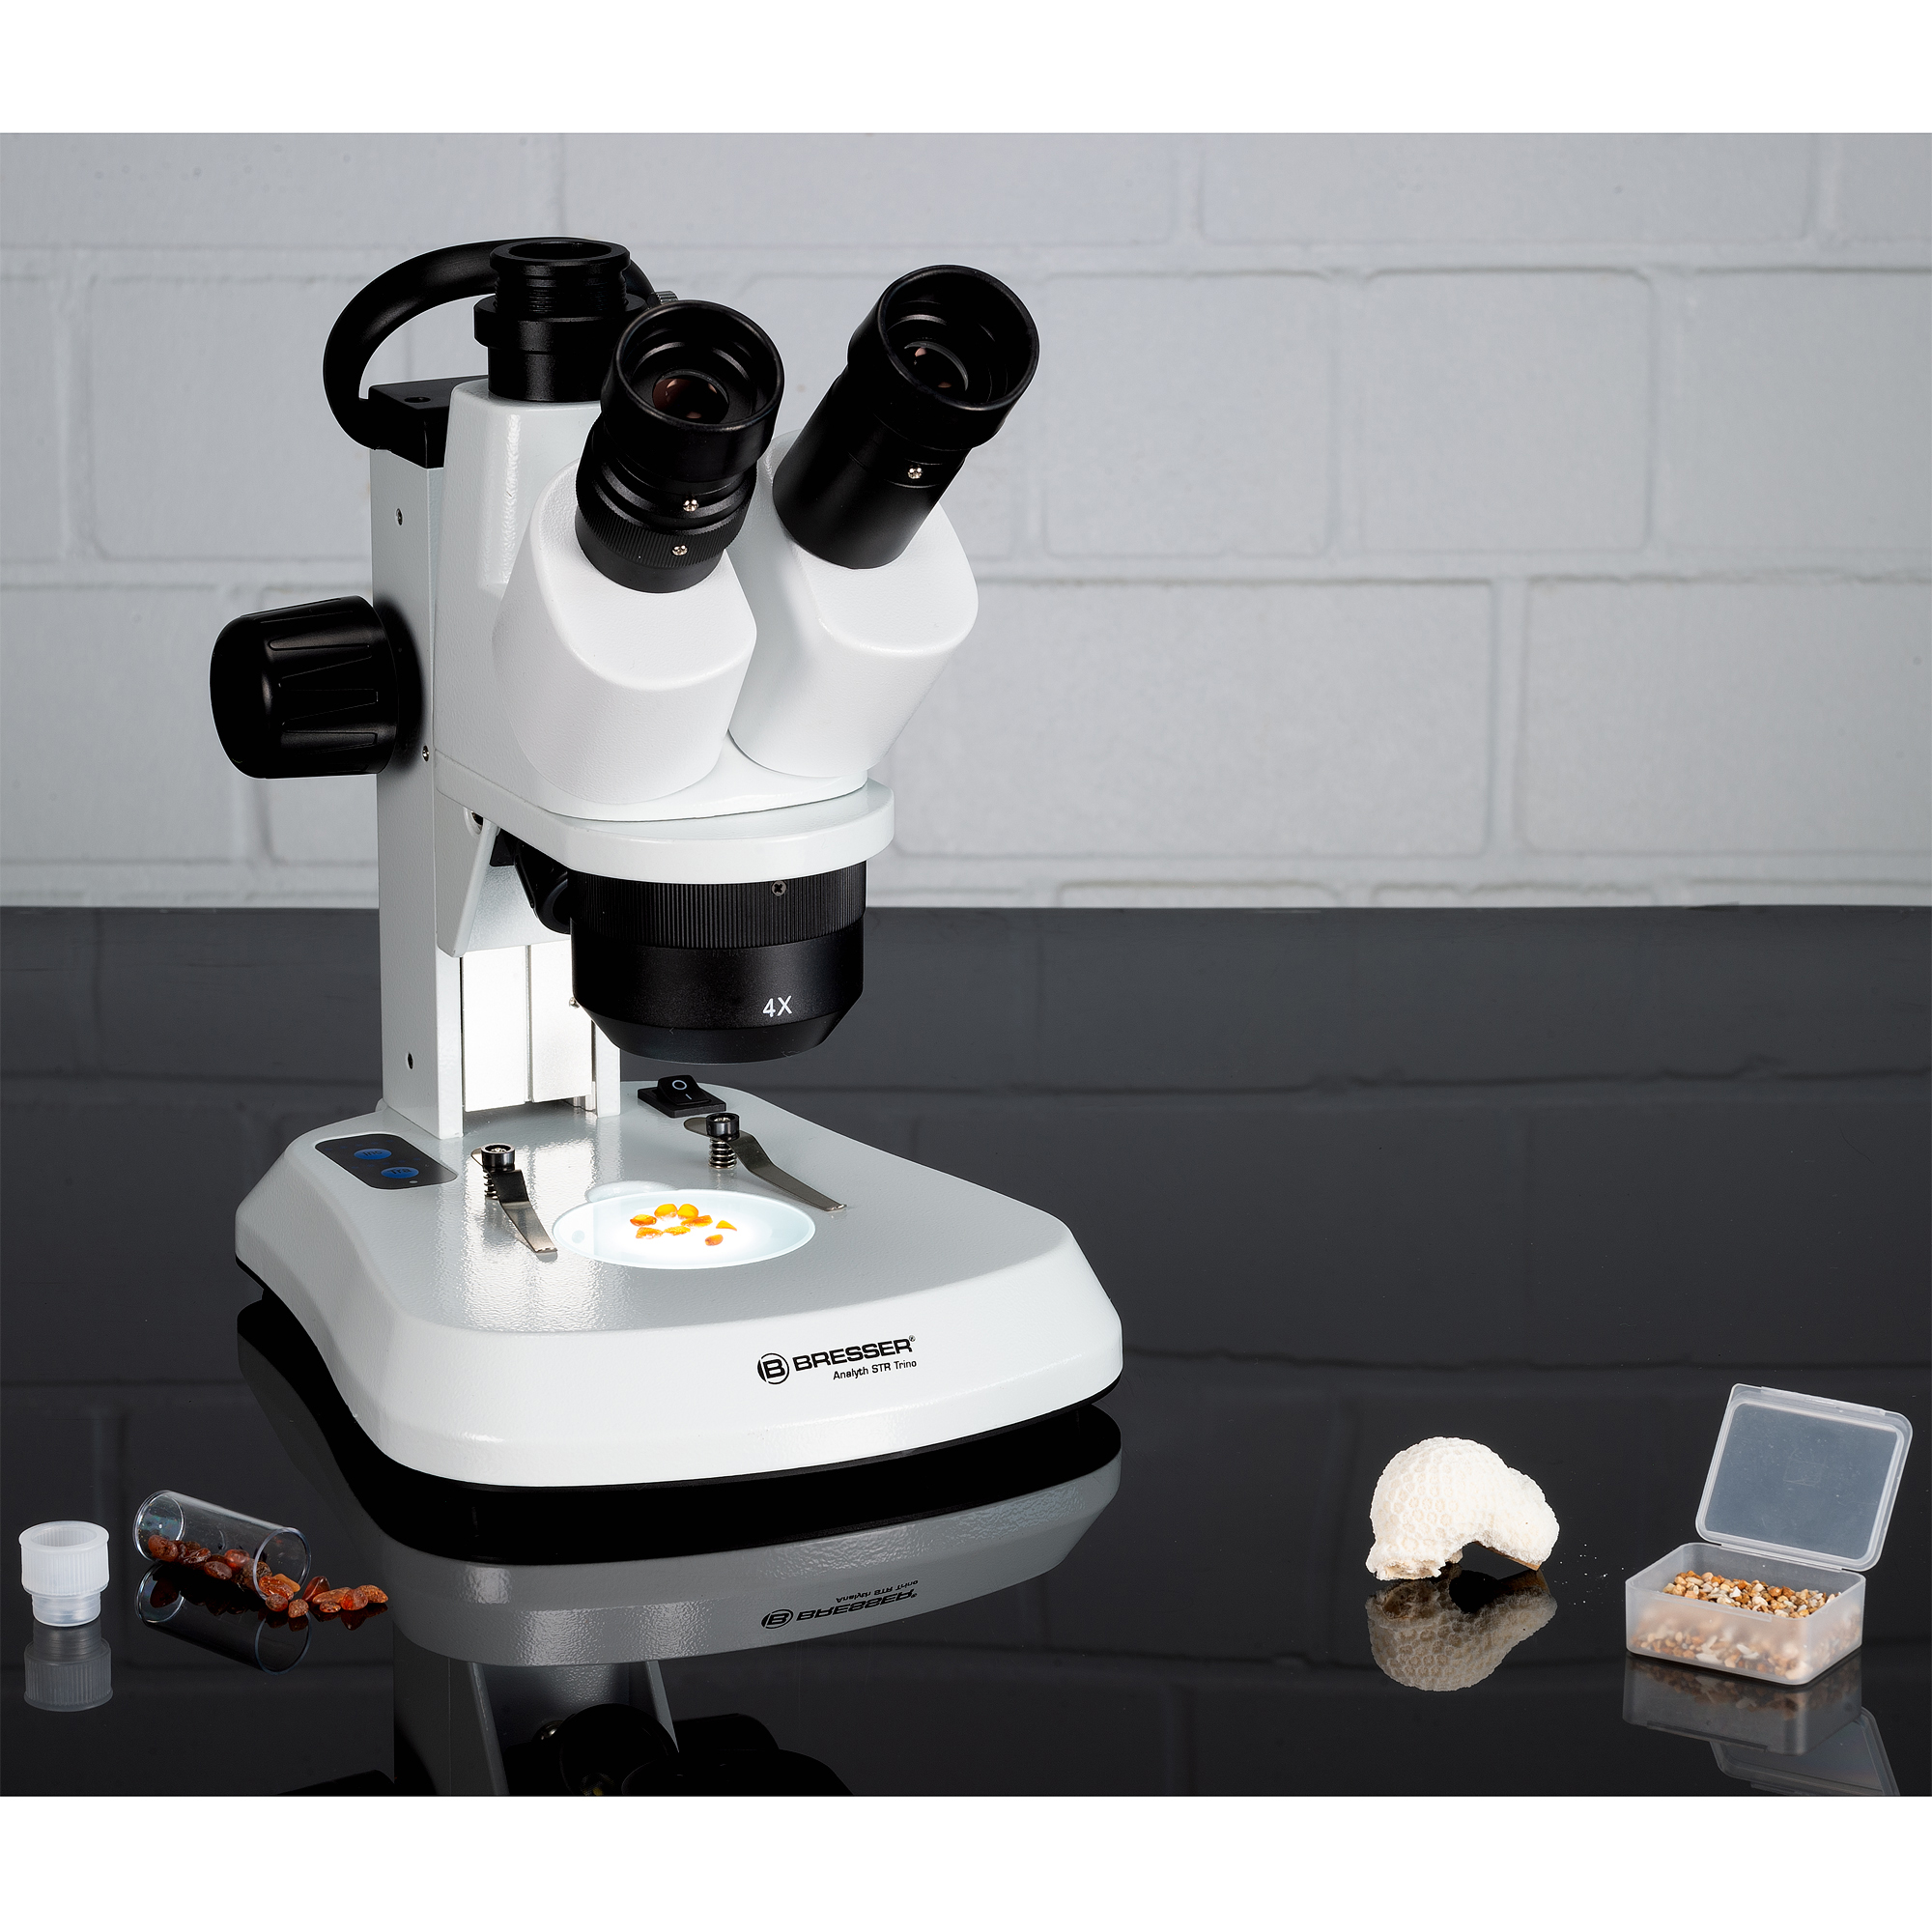 BRESSER Analyth STR Trino 10x - 40x Microscope trinoculaire stéréo avec lumière incidente et transmise